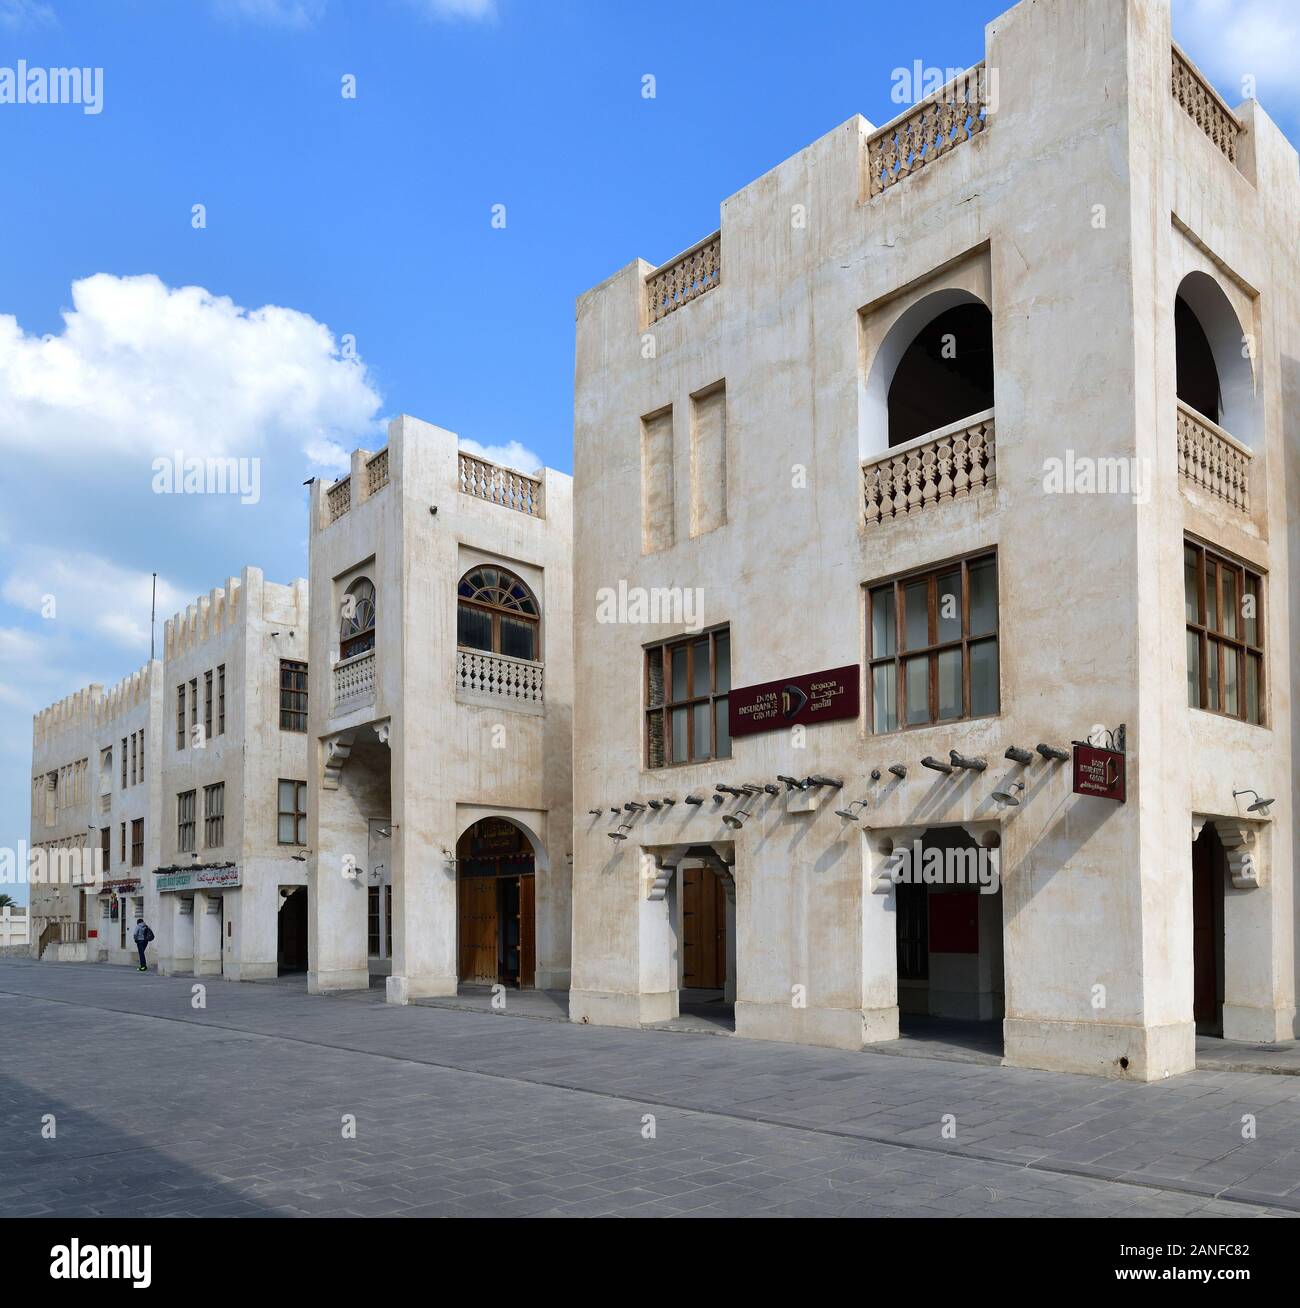 Doha, Qatar - Nov 21. 2019. Al Jasra - urban area in the old town Stock Photo